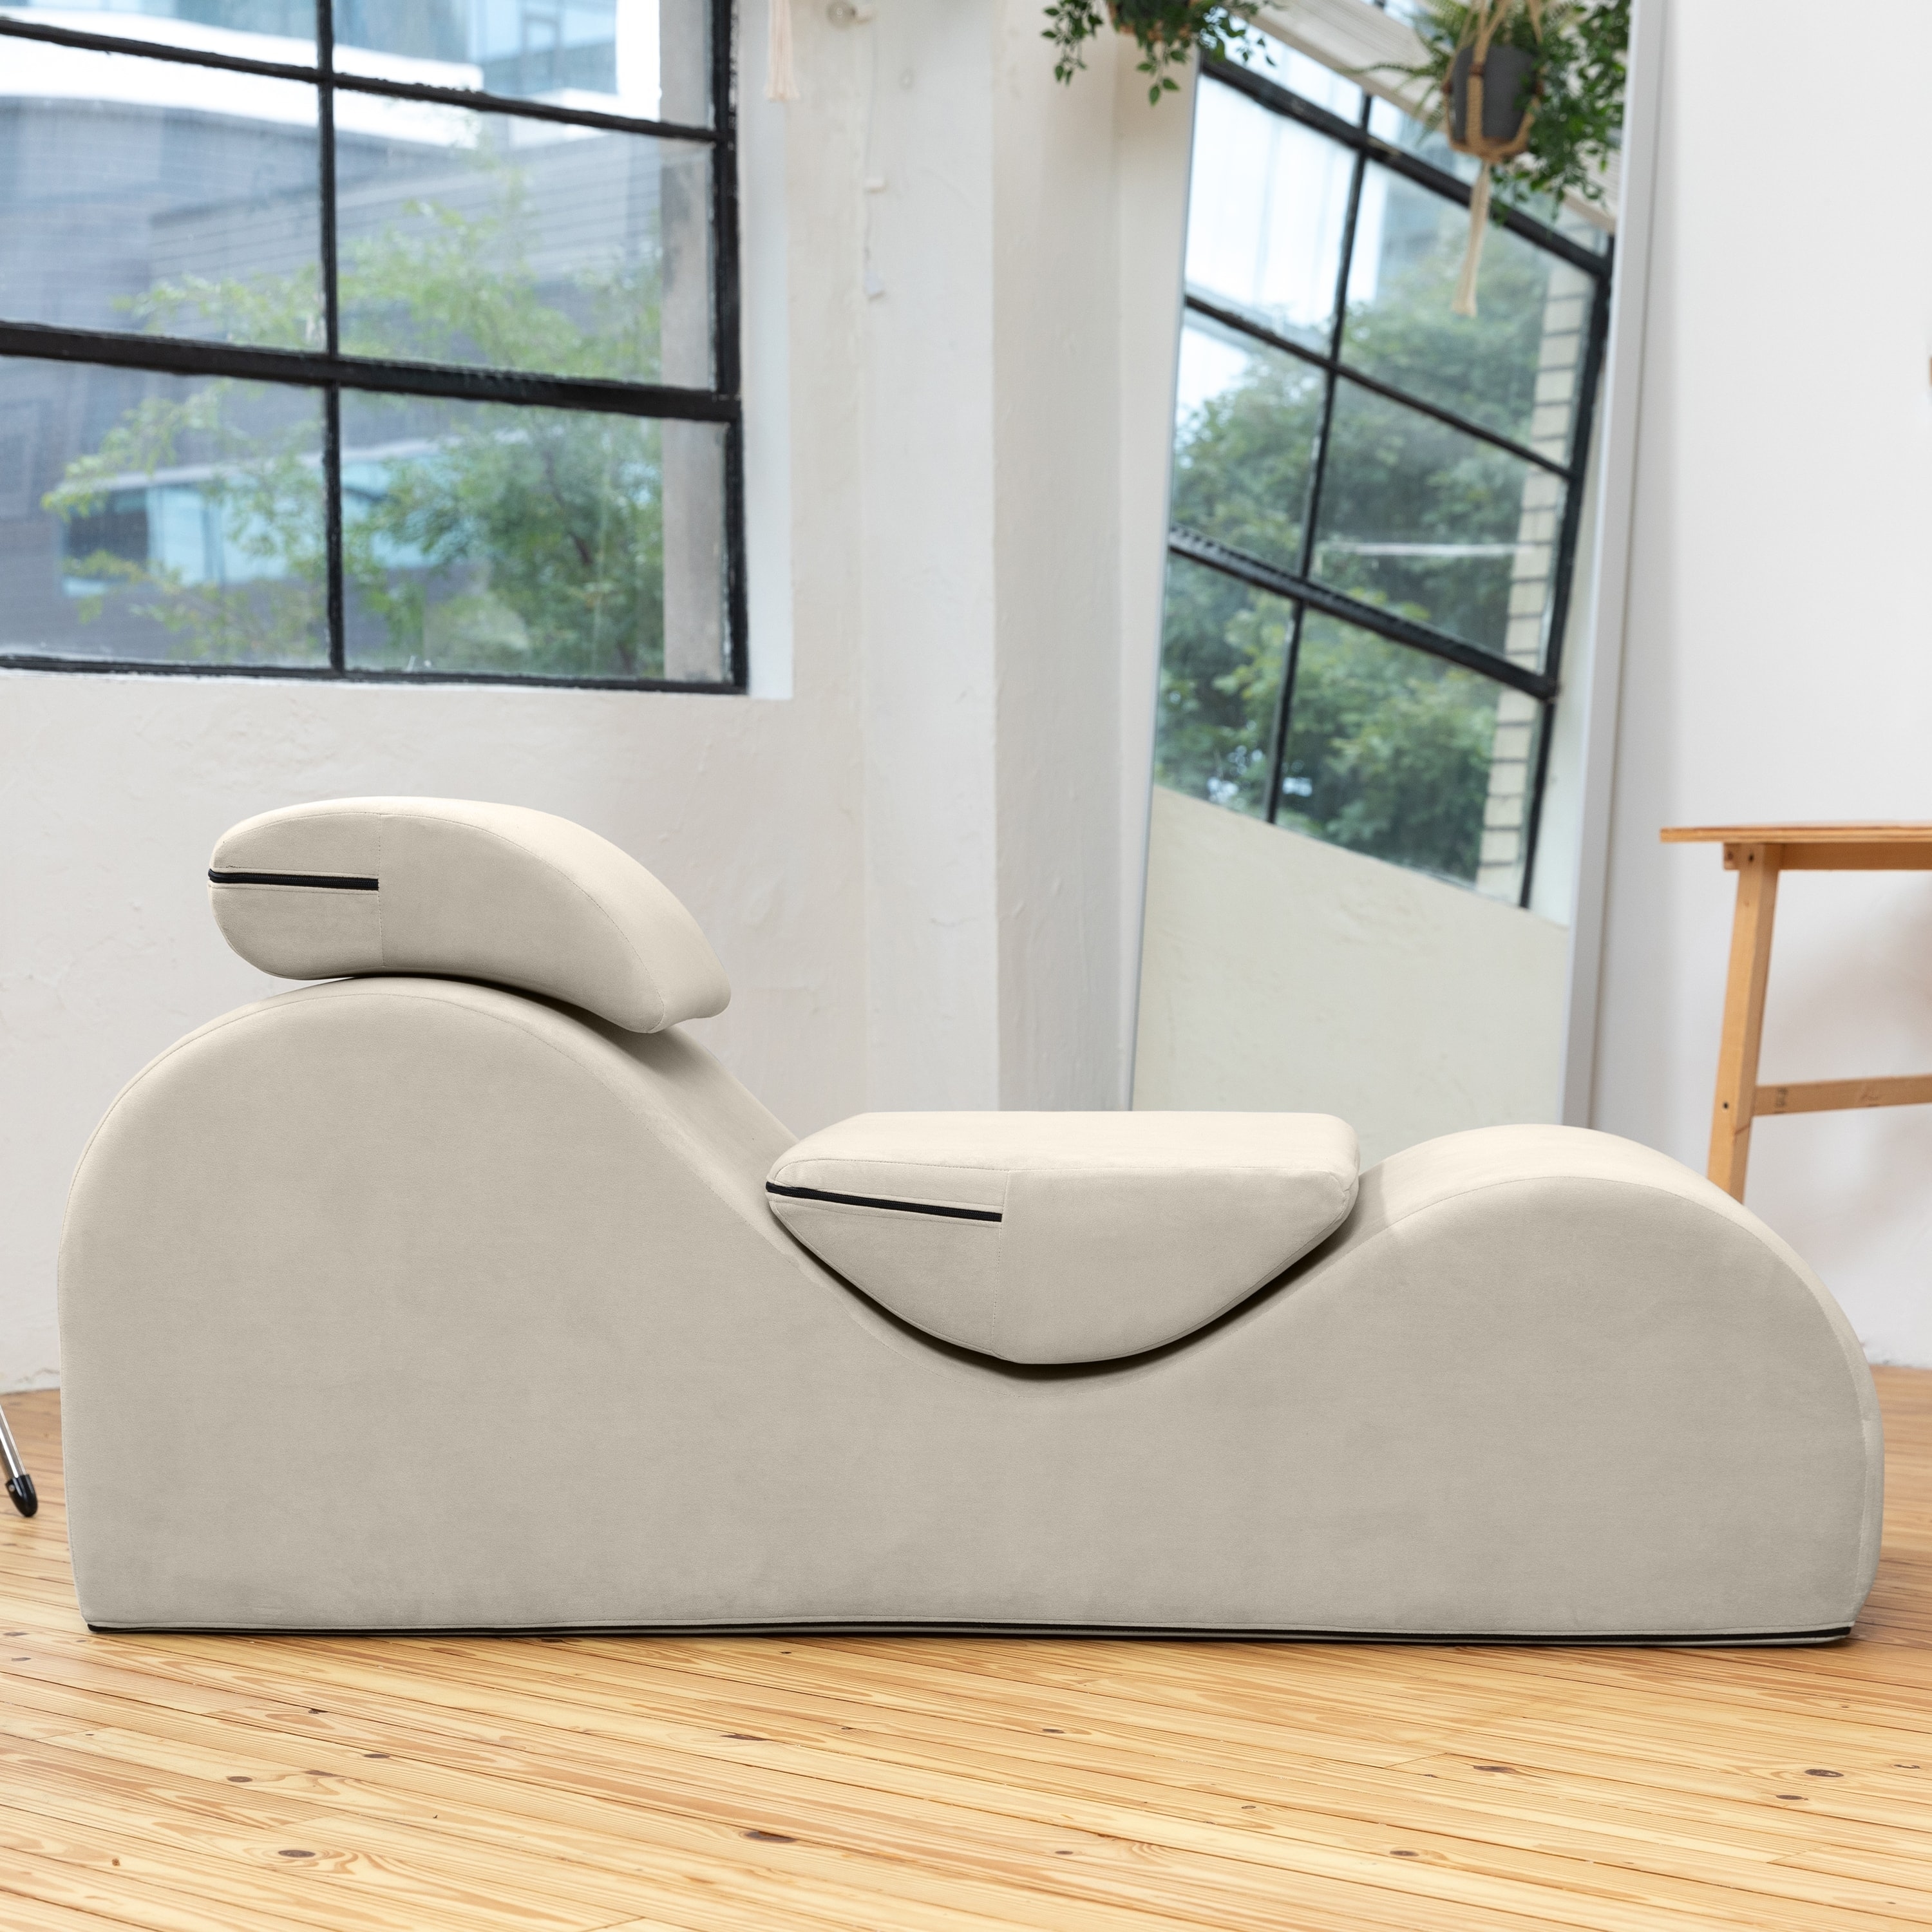 Avana Yoga Chaise Lounge Chair - On Sale - Bed Bath & Beyond - 32751040